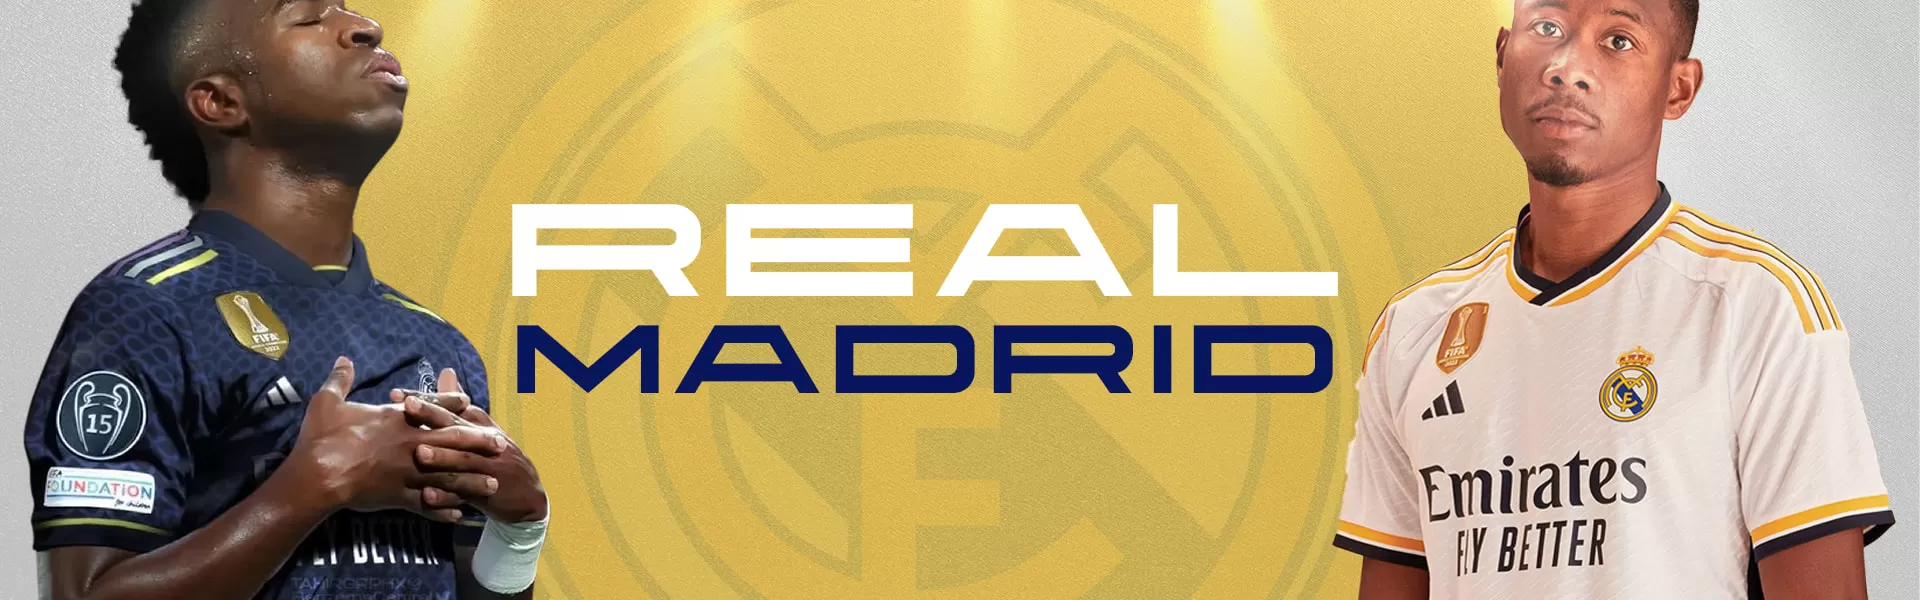 Camiseta adidas 3a Real Madrid Modric mujer 2023 2024